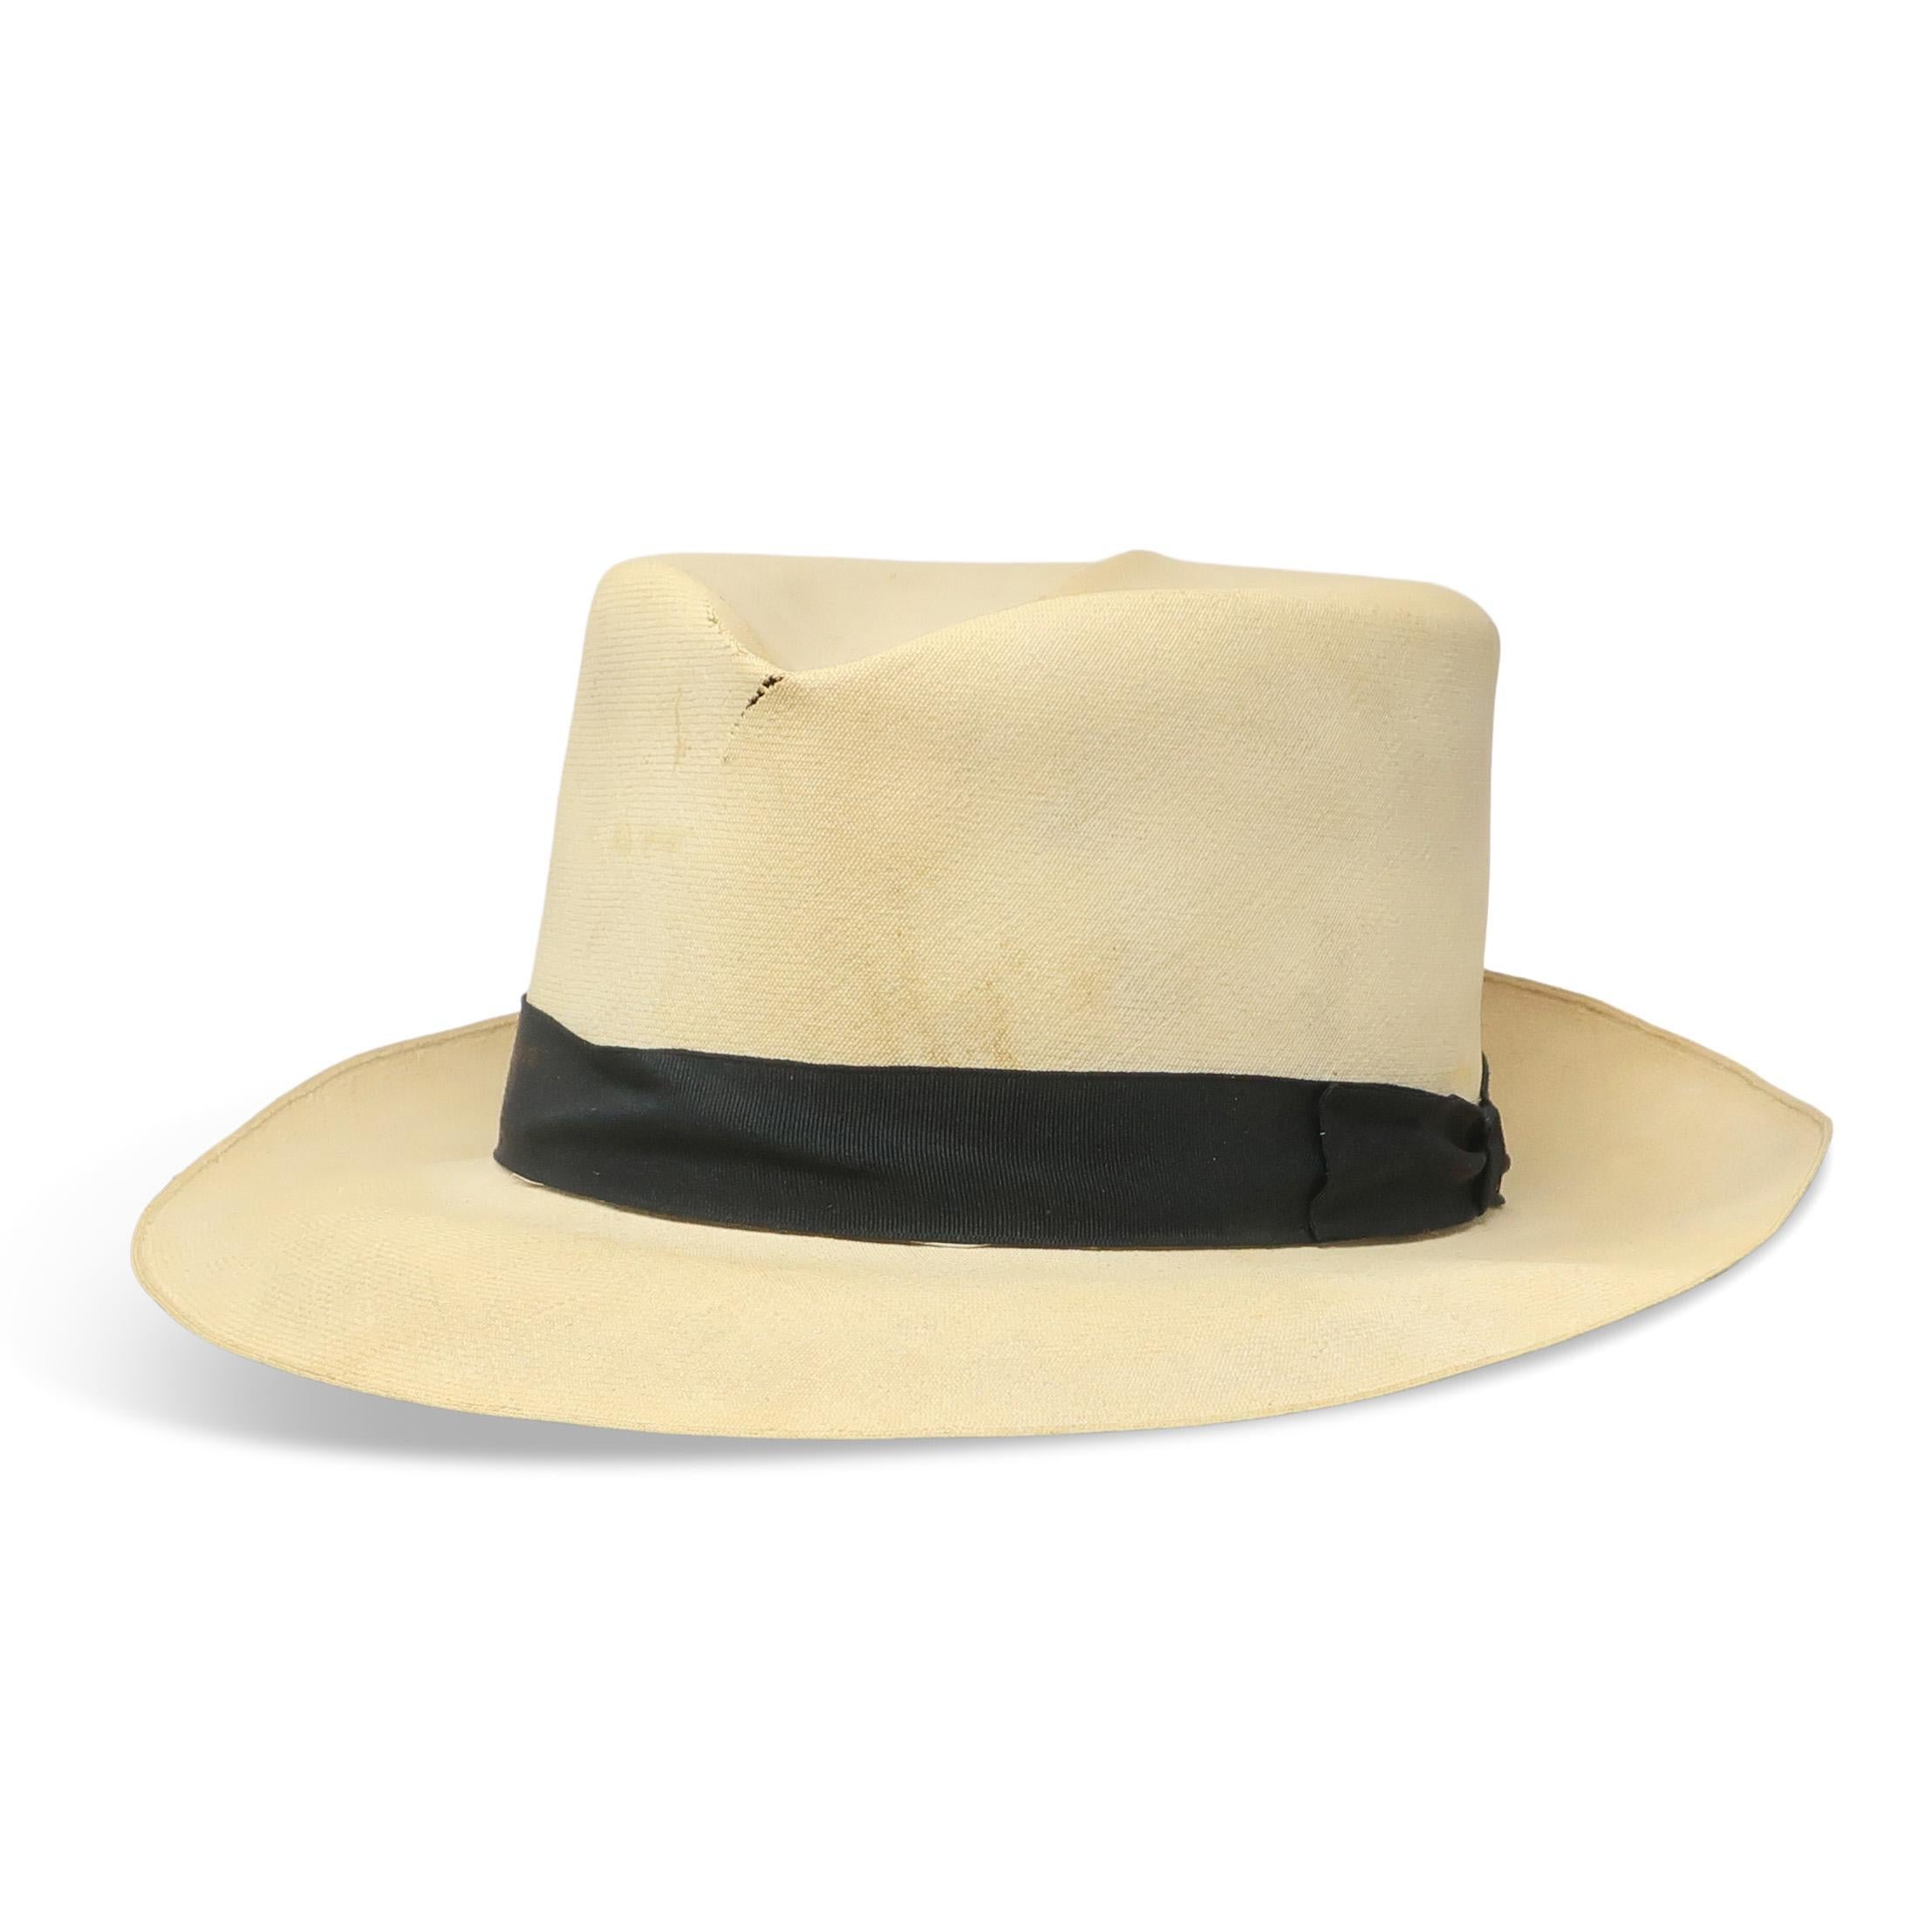 Mid-Century Modern Vintage 1930s Panama Hat by John Cavanagh, Ltd. in Original Box